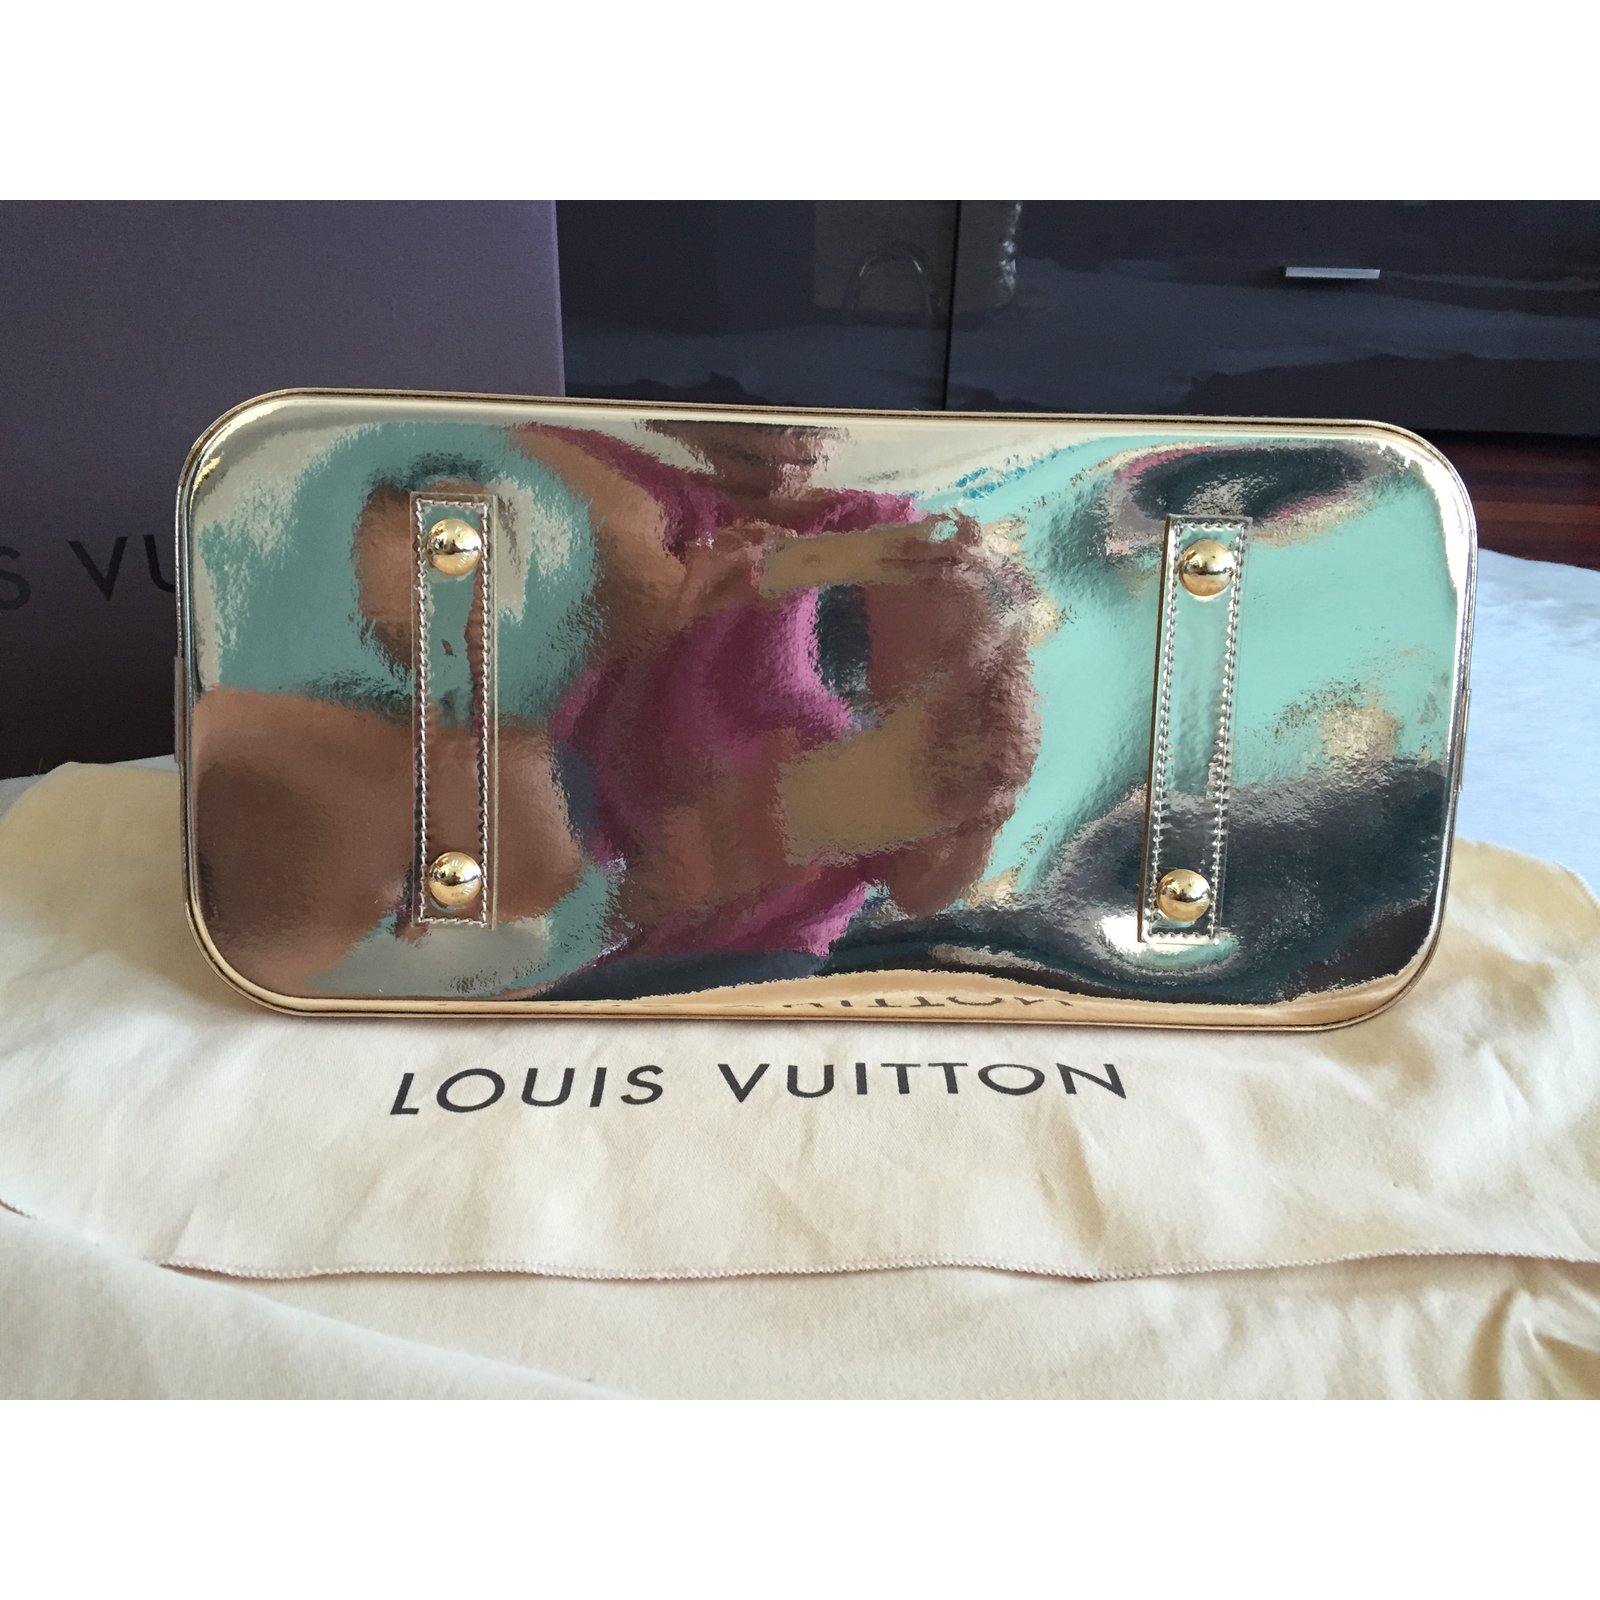 ✨NEW ARRIVAL✨ Louis Vuitton Gold Monogram Miroir Alma GM